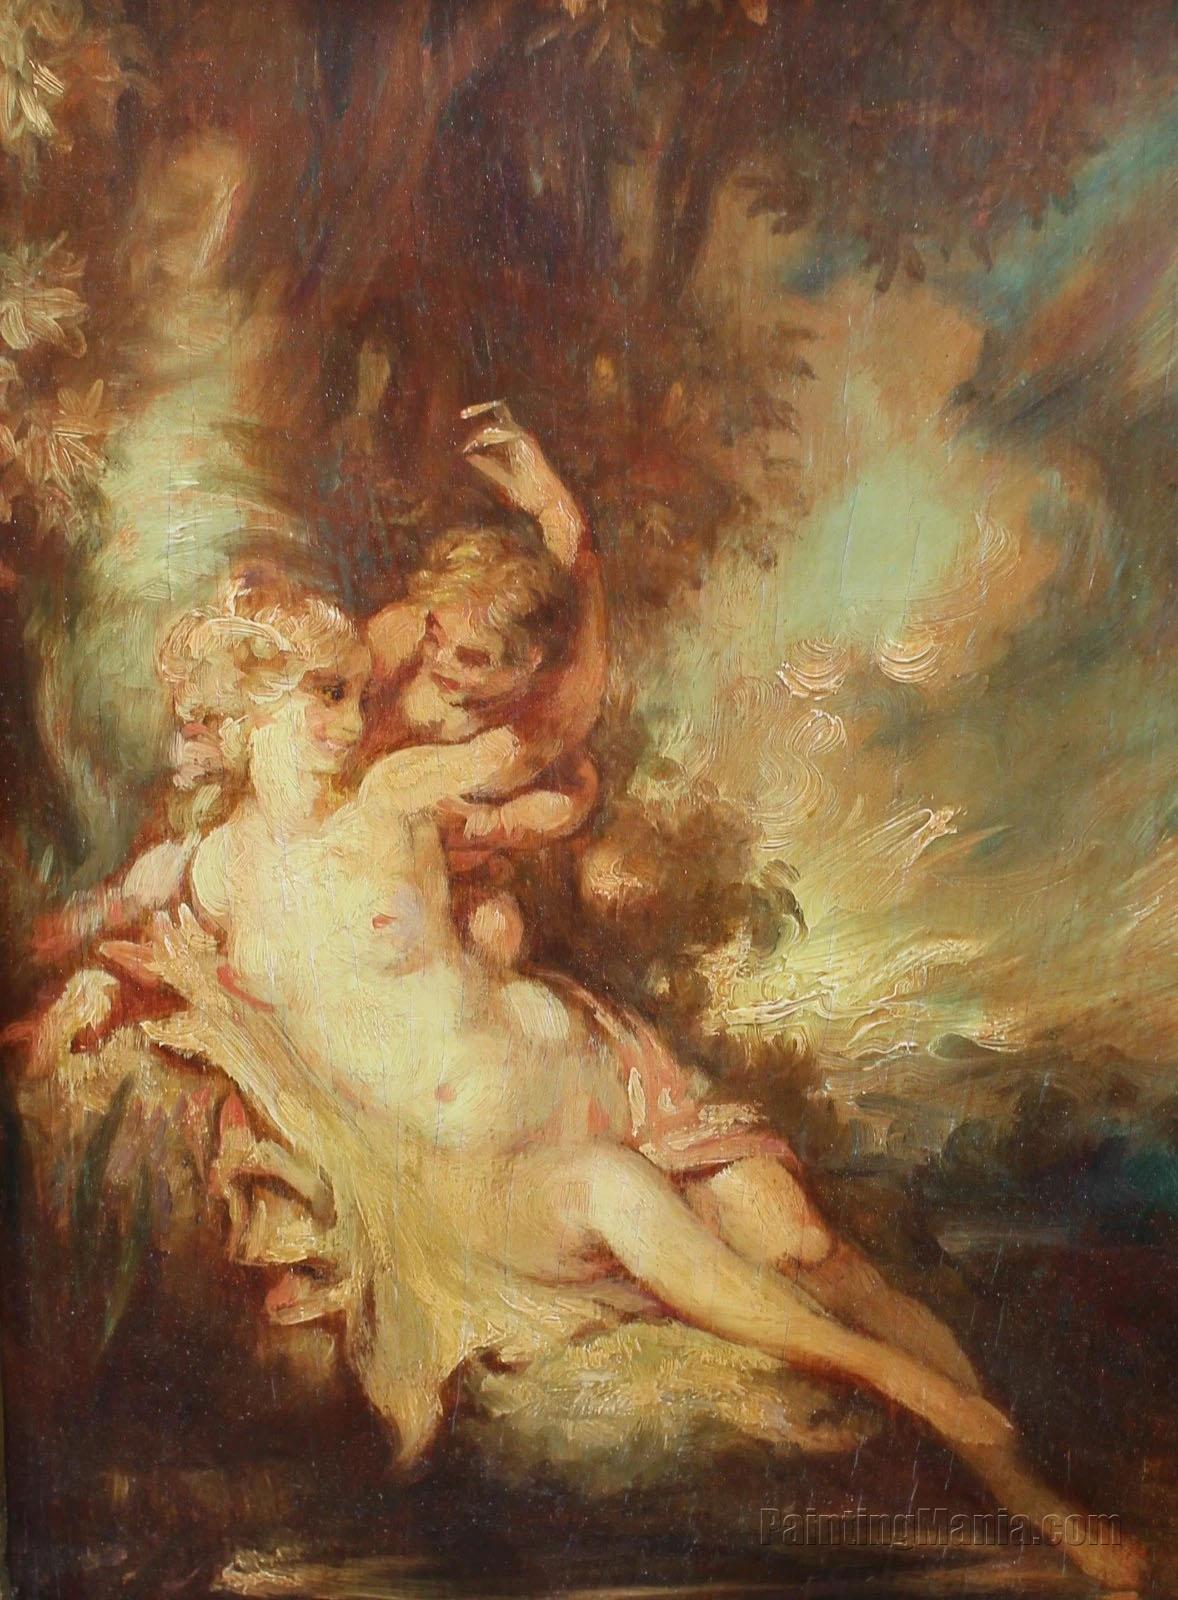 Venus et l'Amour (Venus and Love)